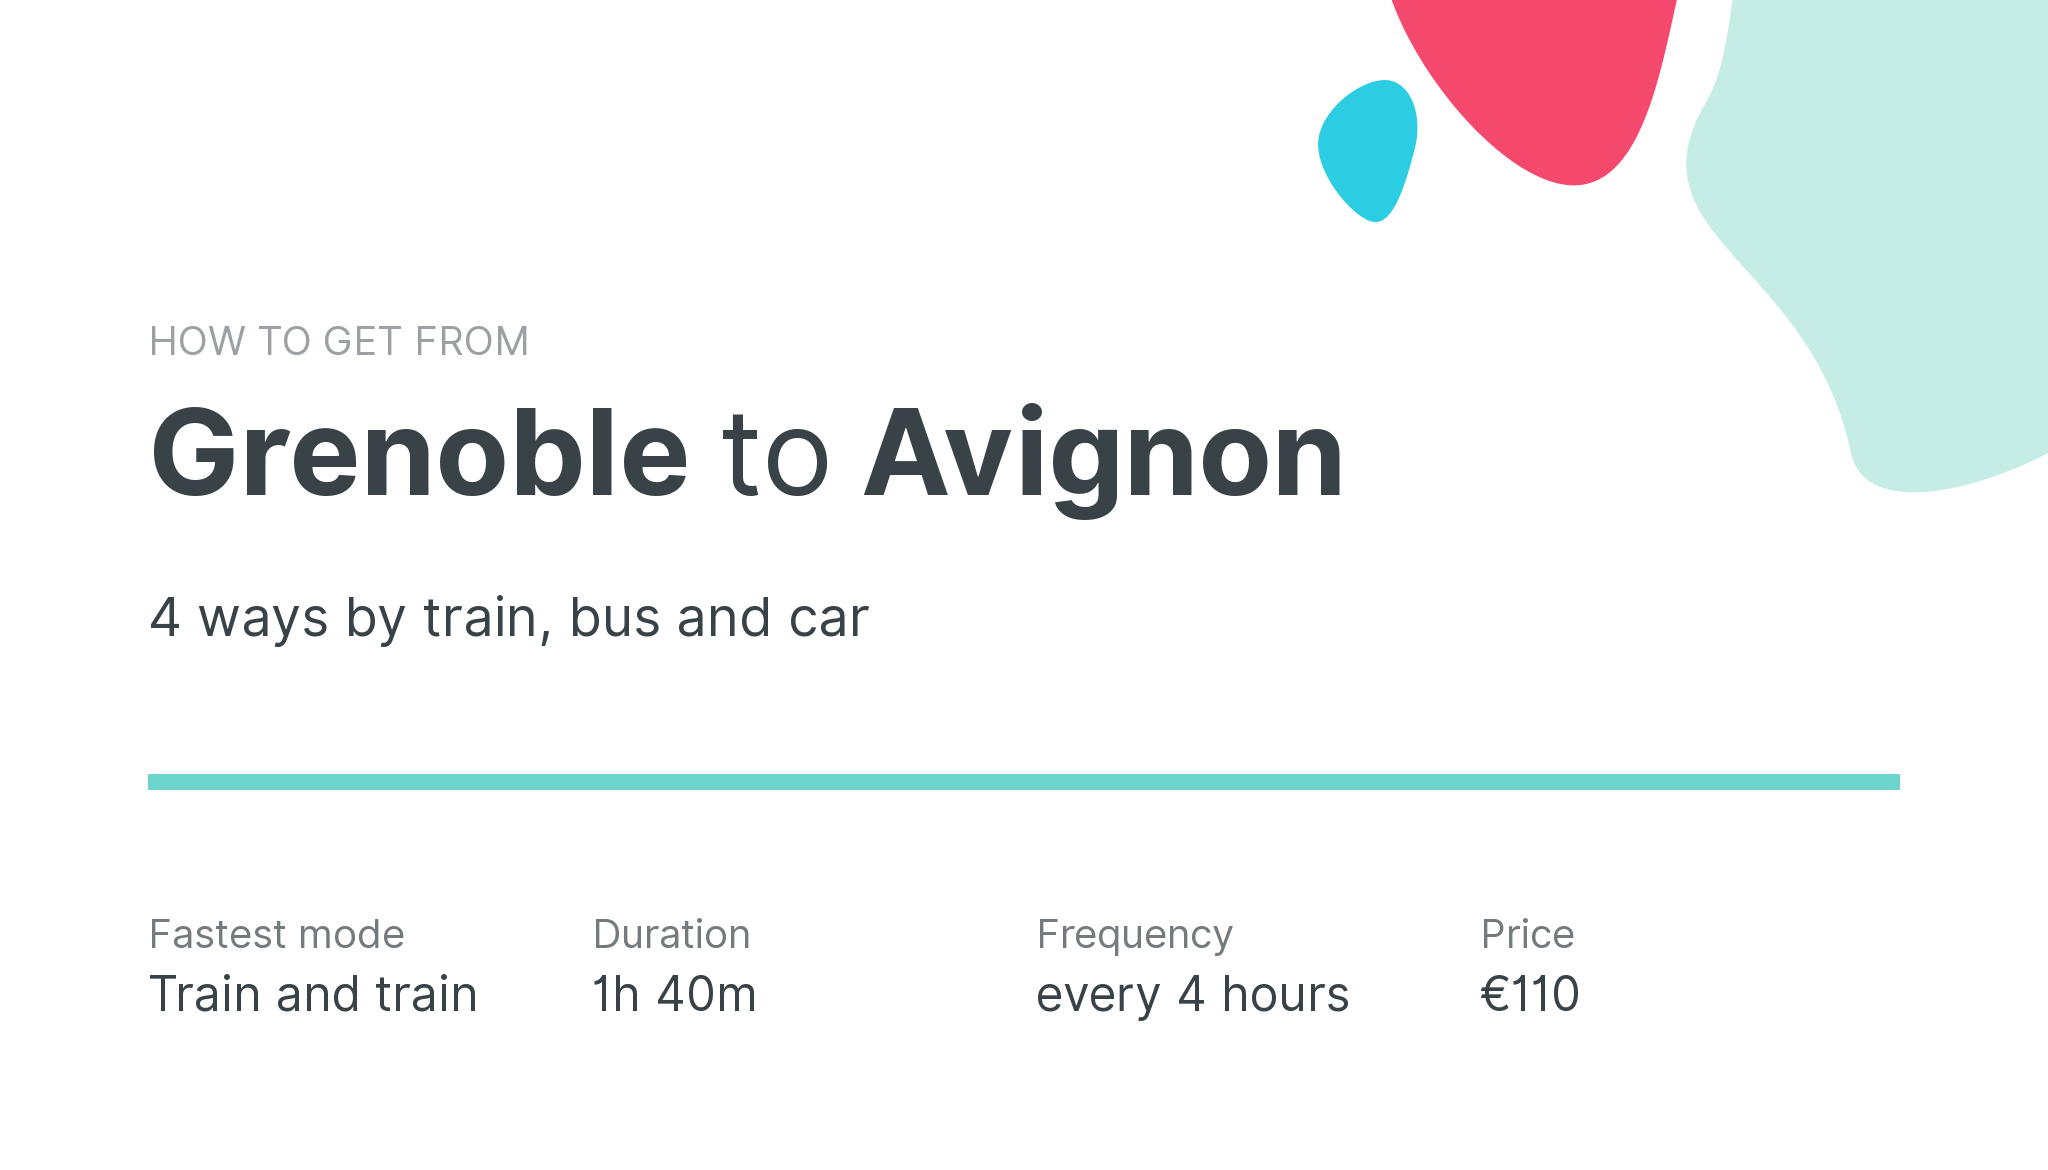 How do I get from Grenoble to Avignon